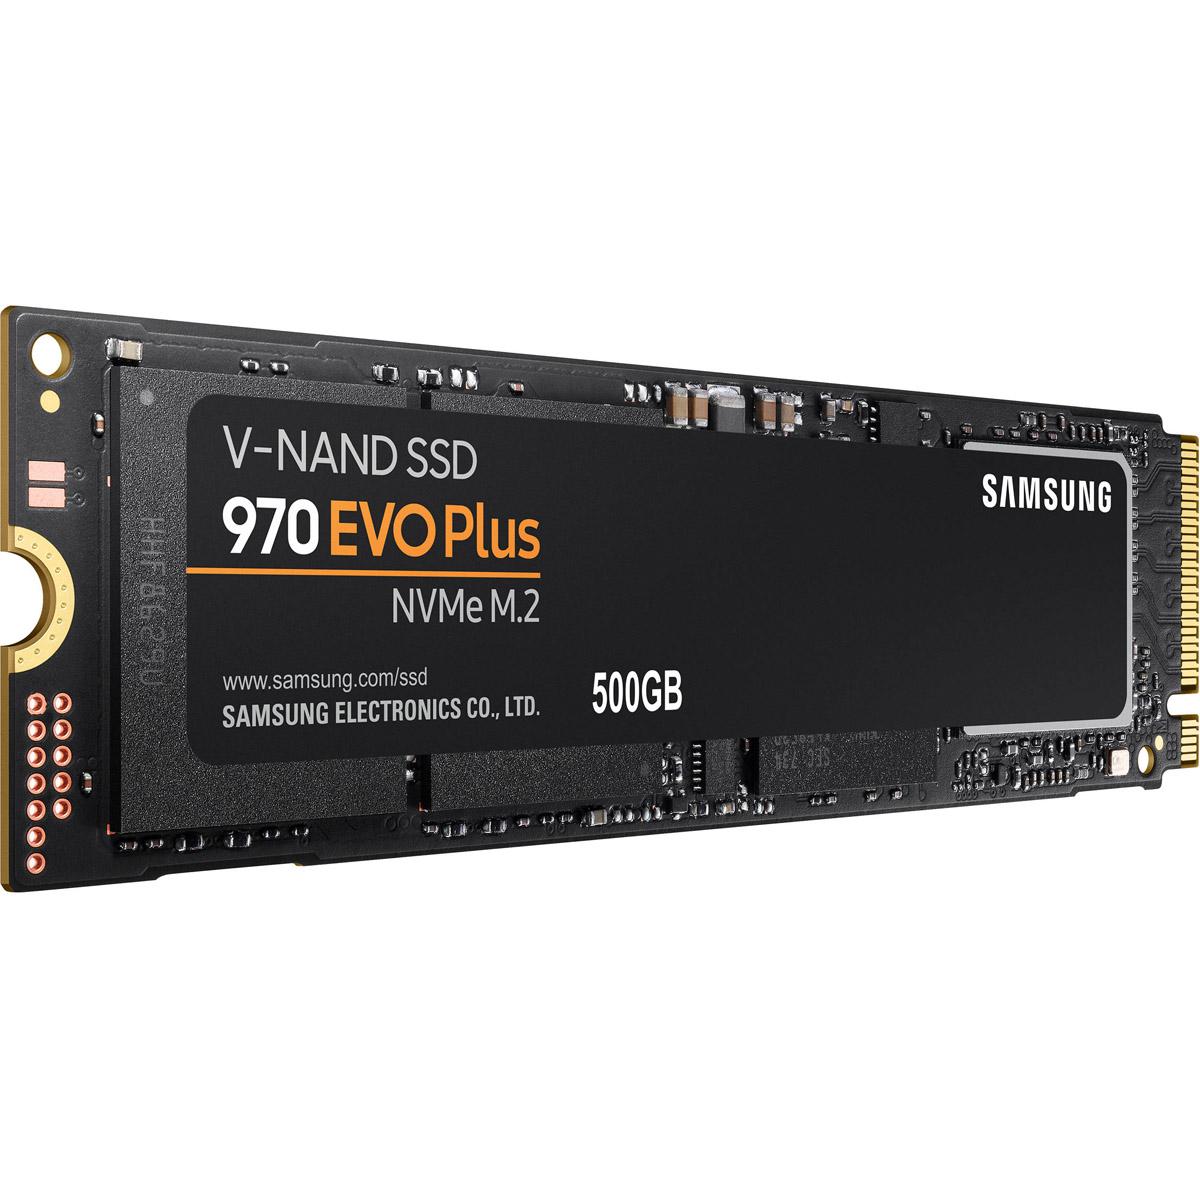 Samsung 970 EVO Plus 500GB PCIe NAND SSD for $49.99 Shipped